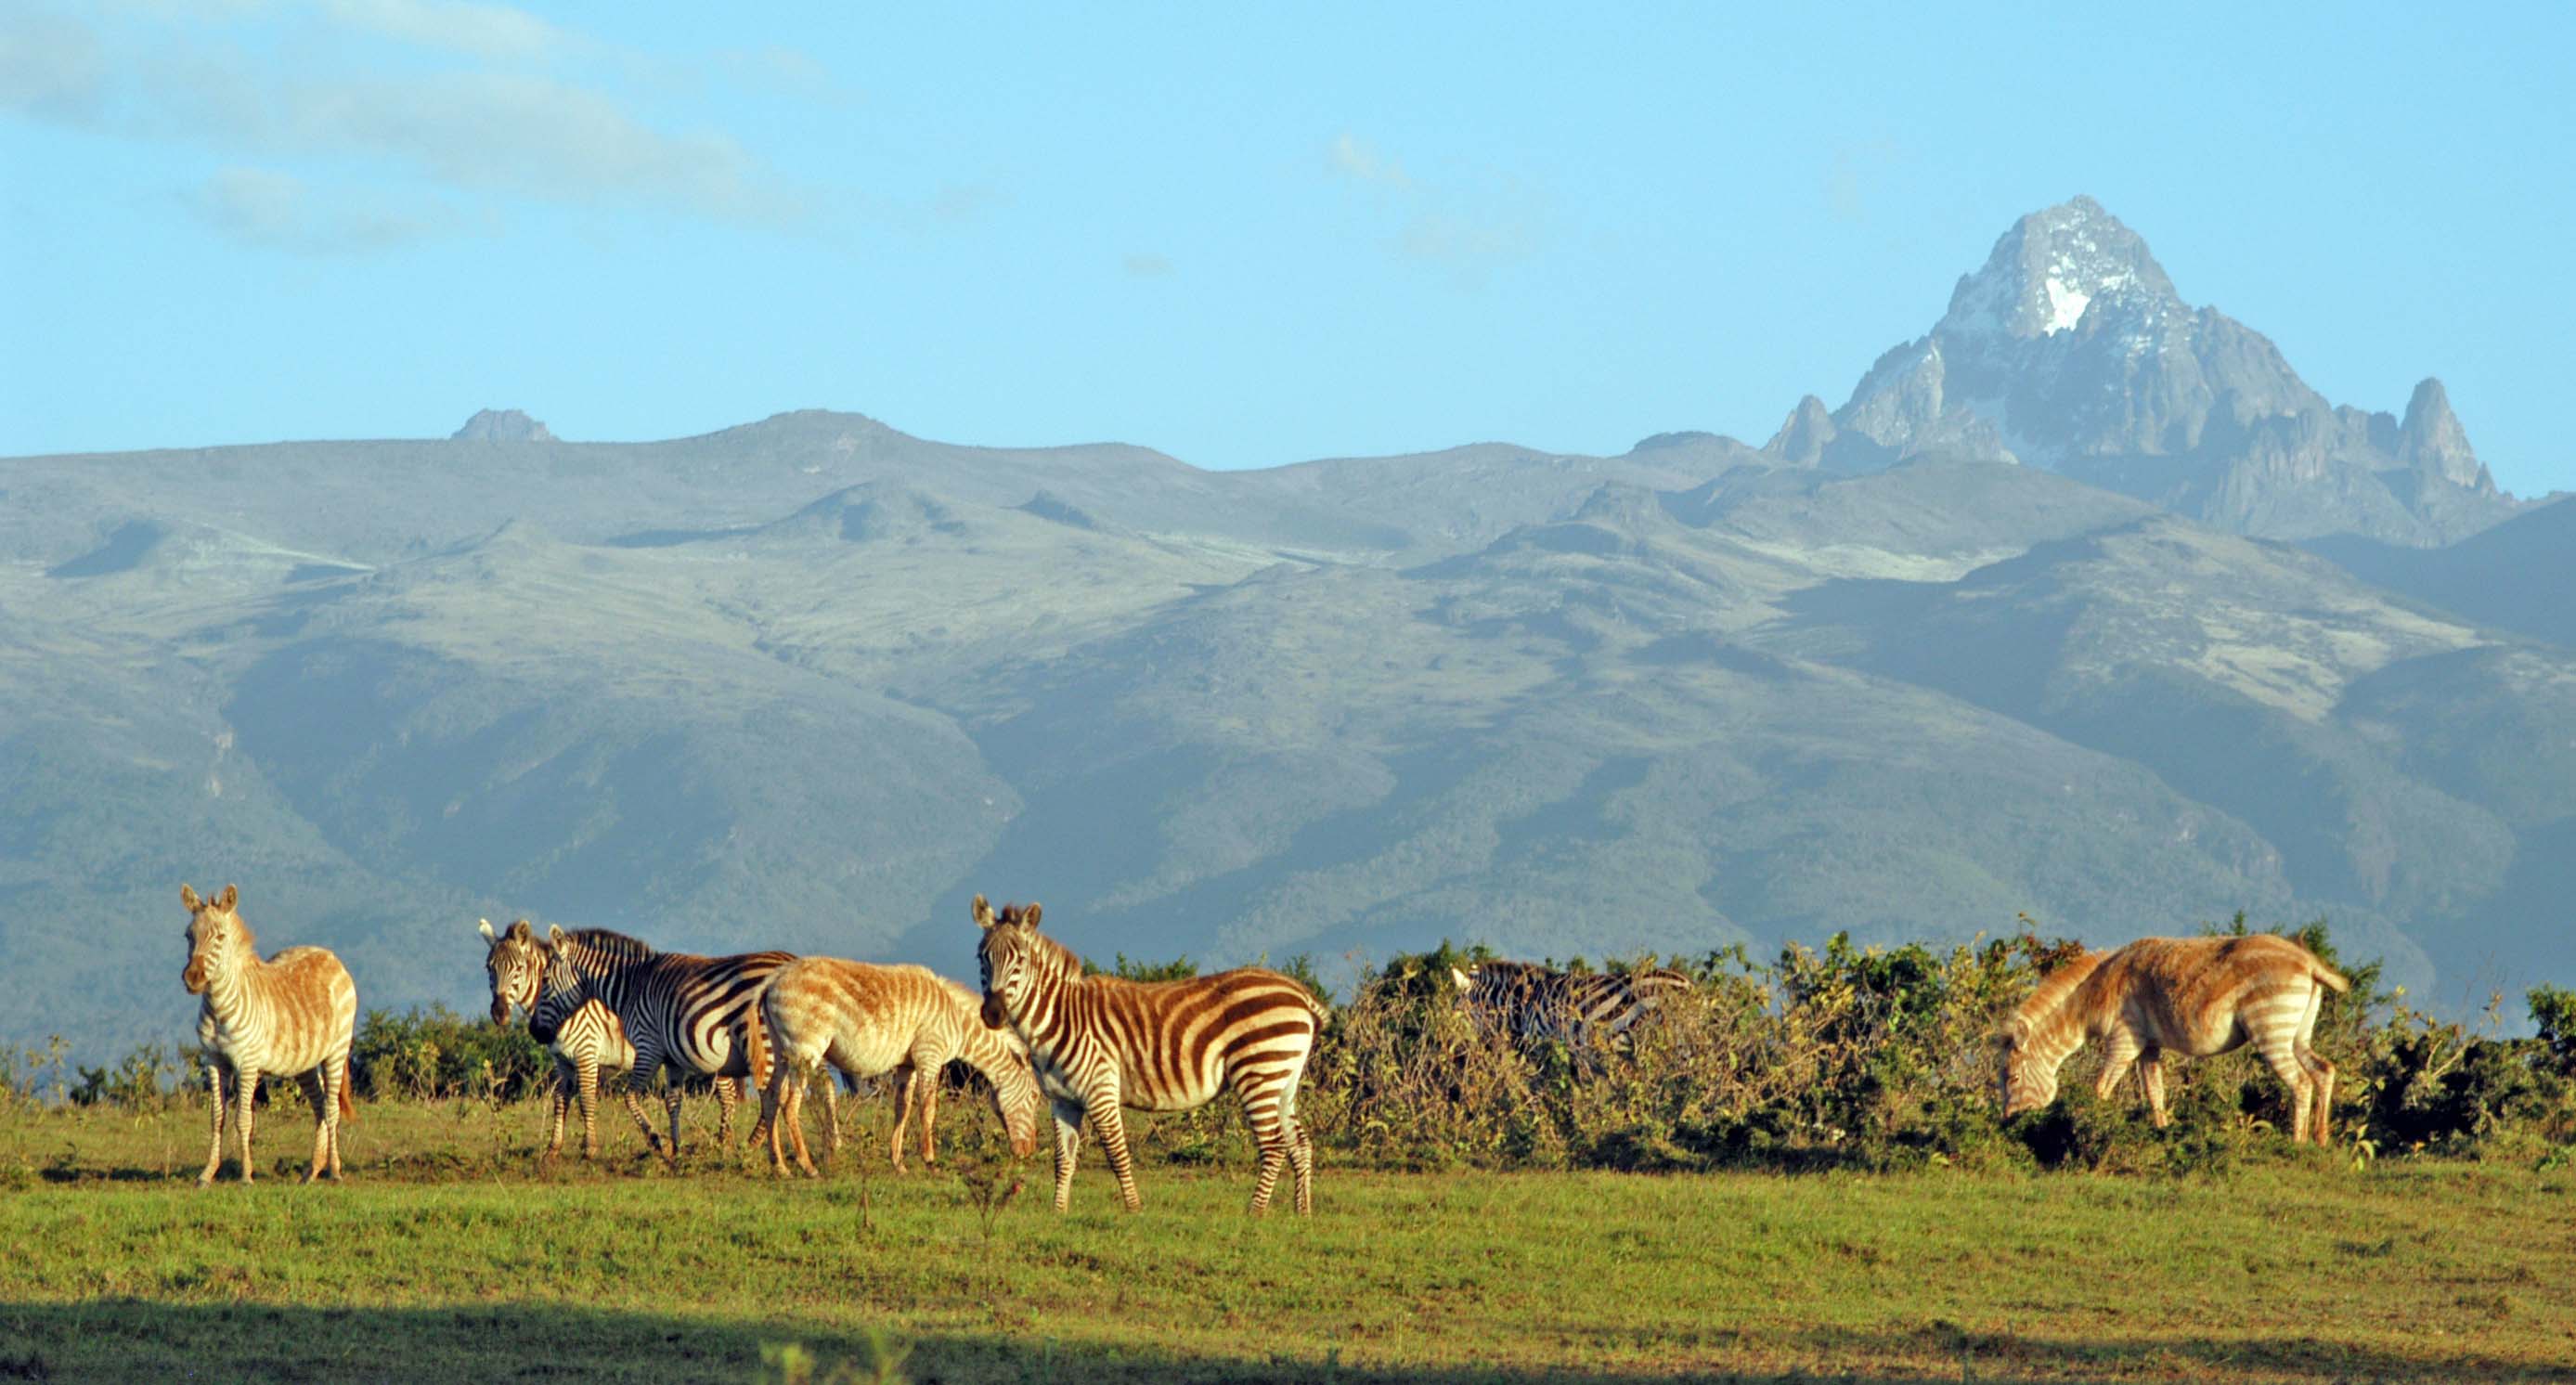 Masai Mara Safaris Provider | Masai Mara affordable safari - Visit Us Now!